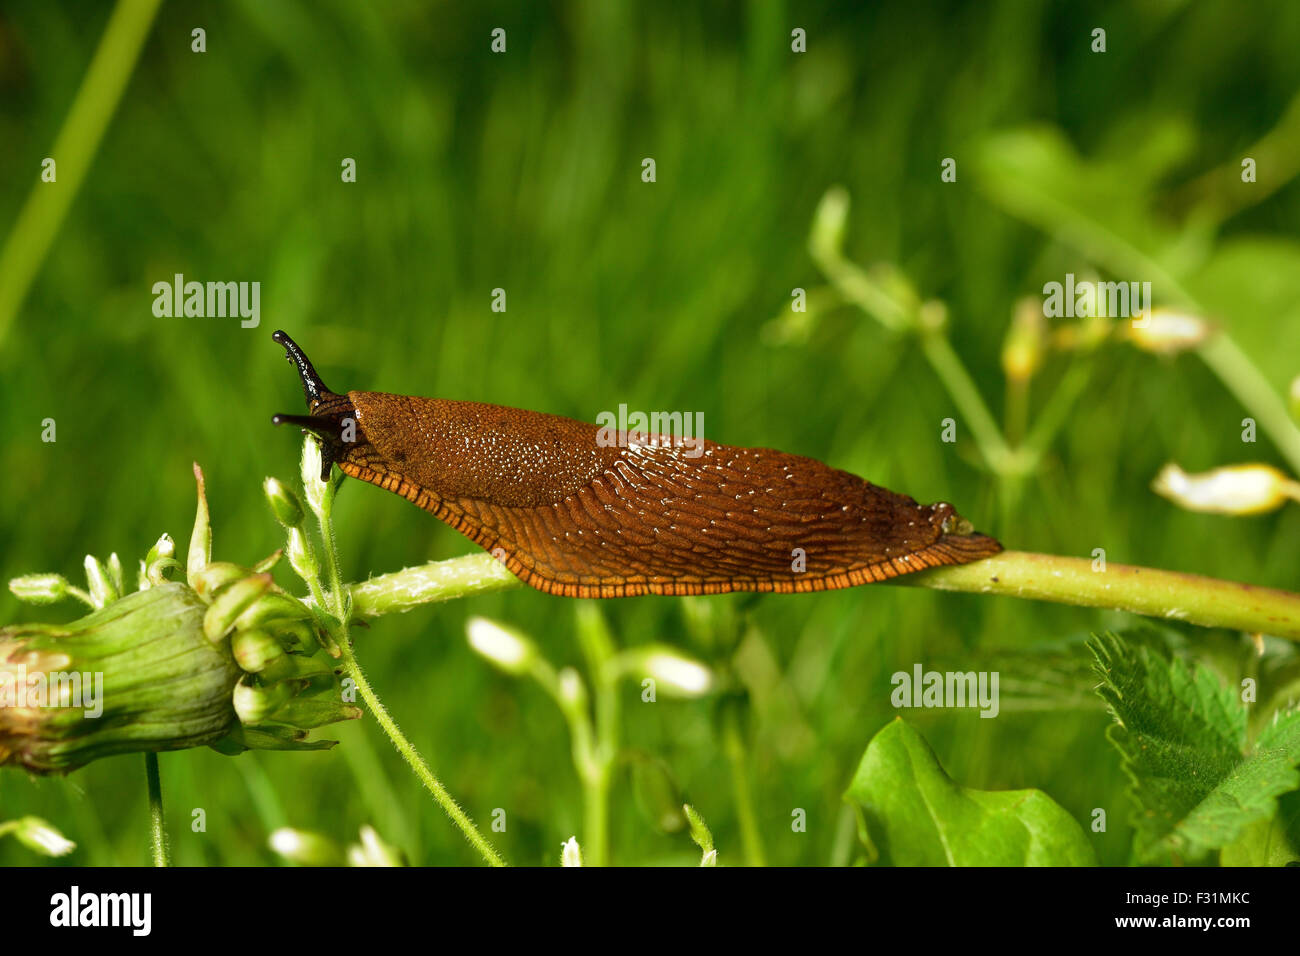 Spanish slug (Arion vulgaris) invasion in garden. Invasive slug. Garden problem. Europe. Stock Photo